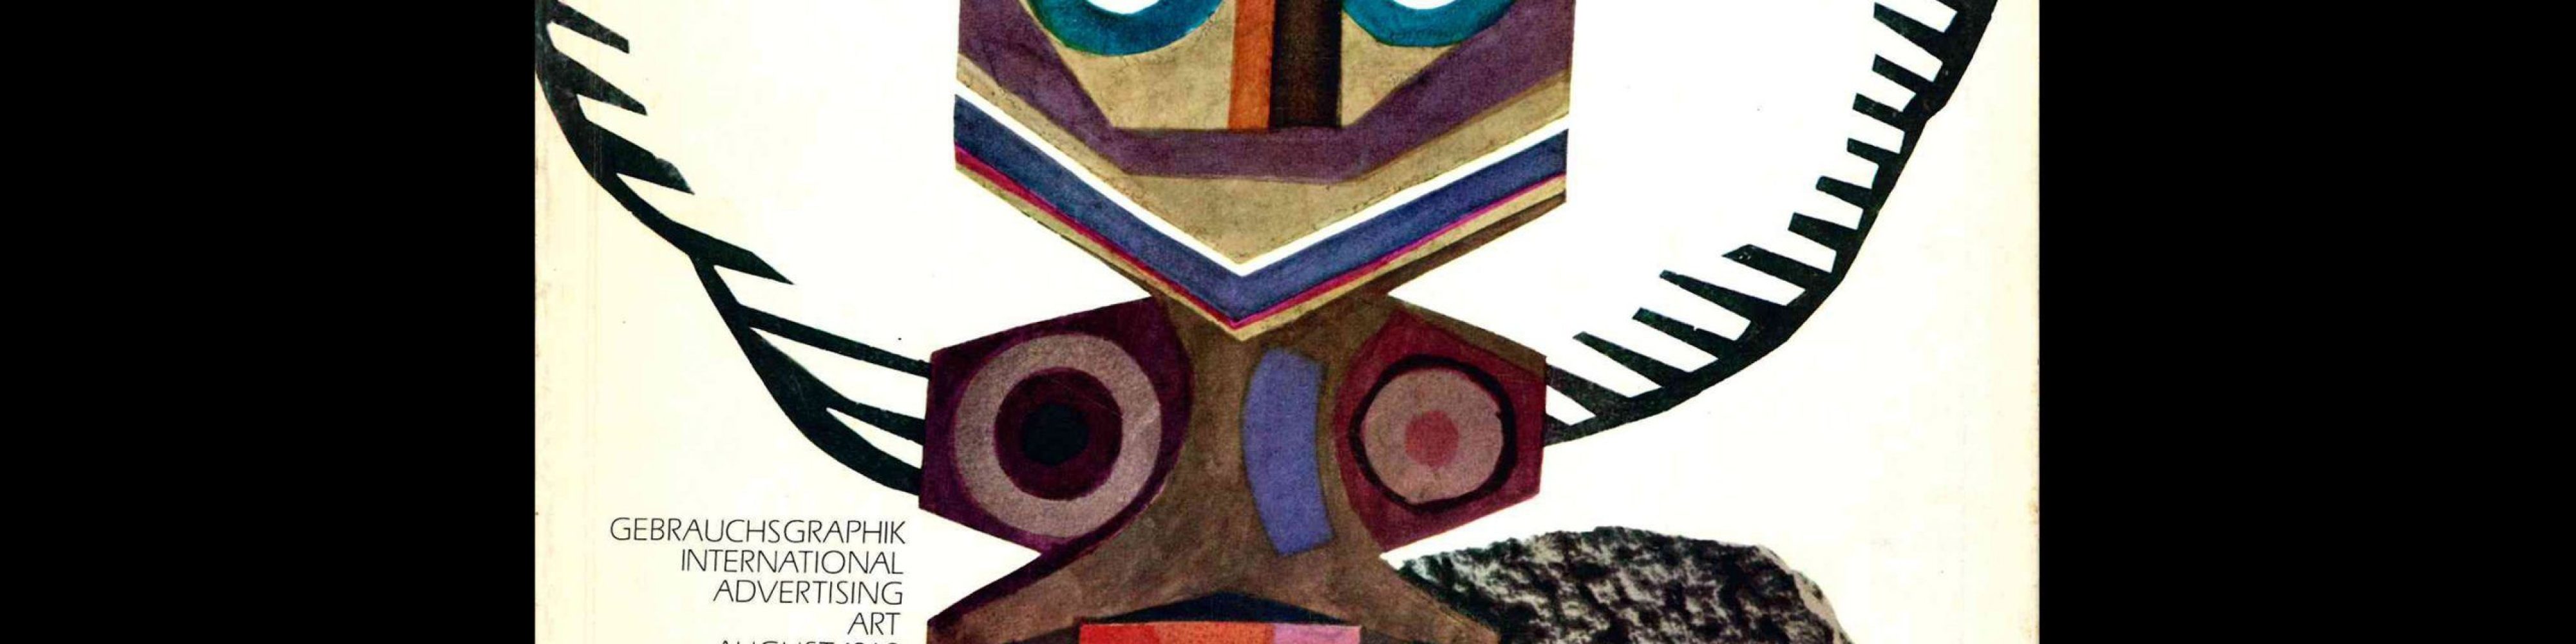 Gebrauchsgraphik, 8, 1968. Cover design by Tomás Vellvé